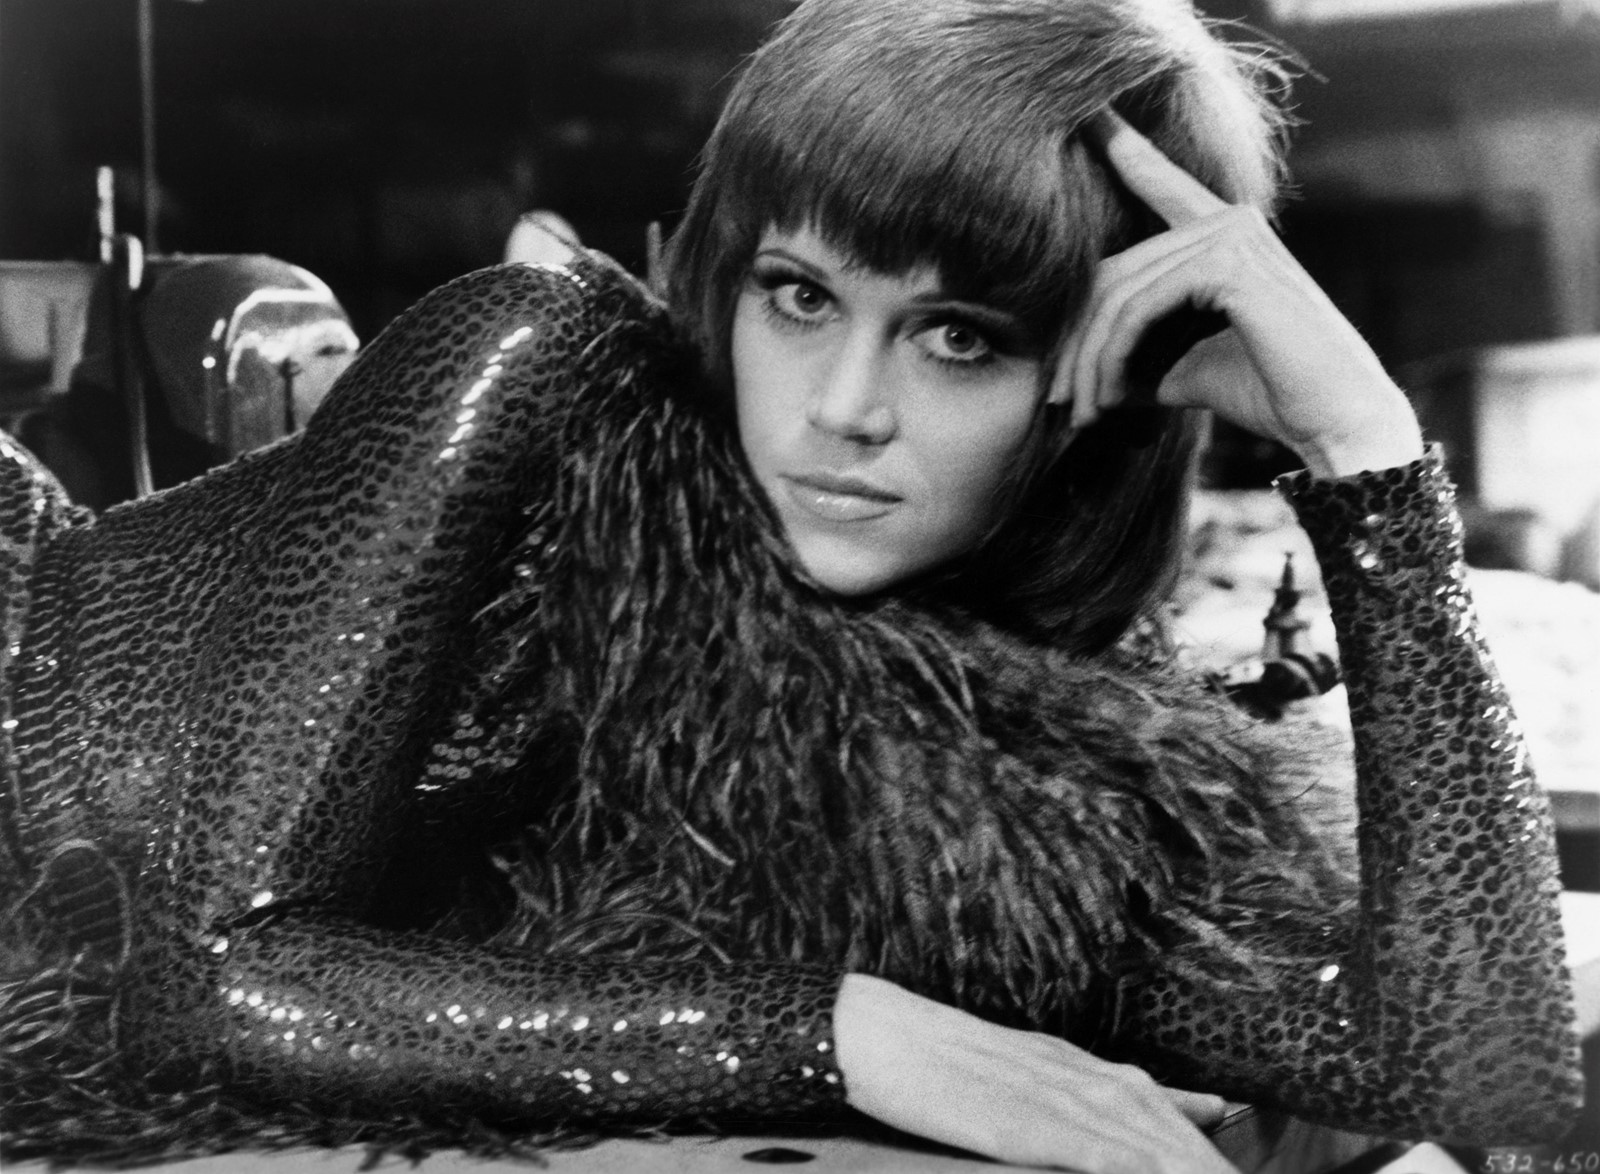 Jane Fonda as Bree Daniels